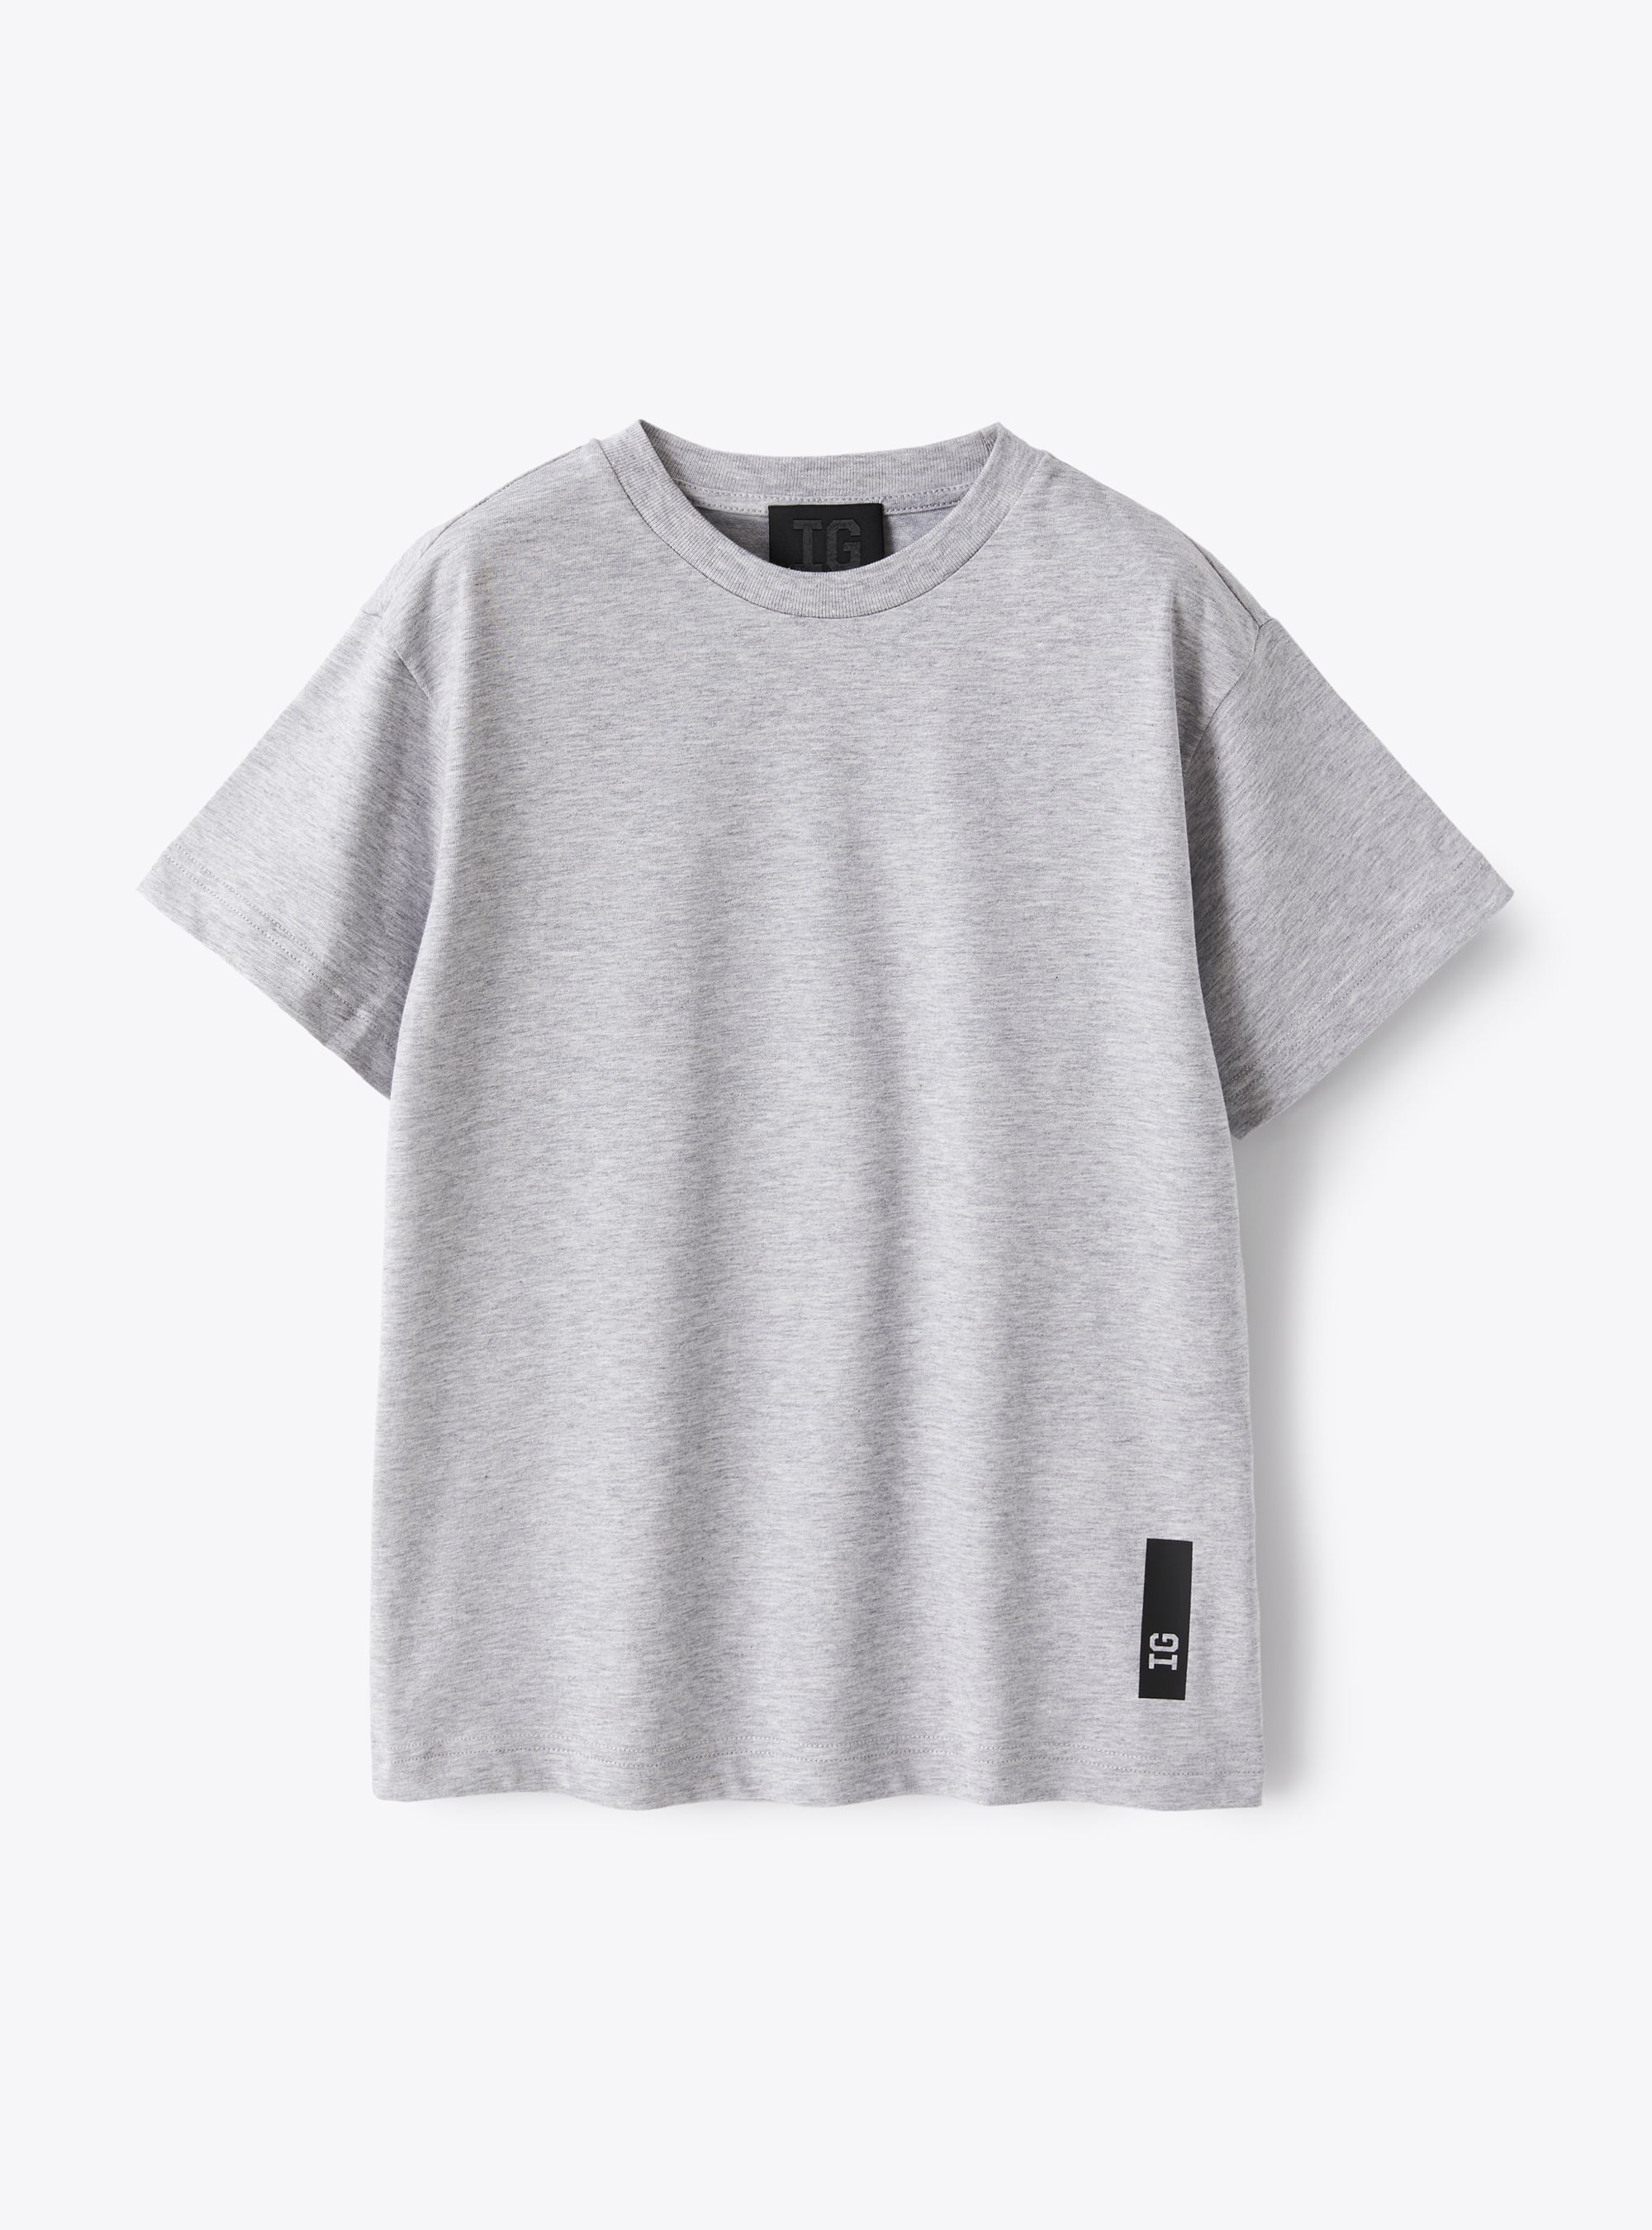 T-Shirt aus grau meliertem Baumwoll-Jersey - T-shirts - Il Gufo